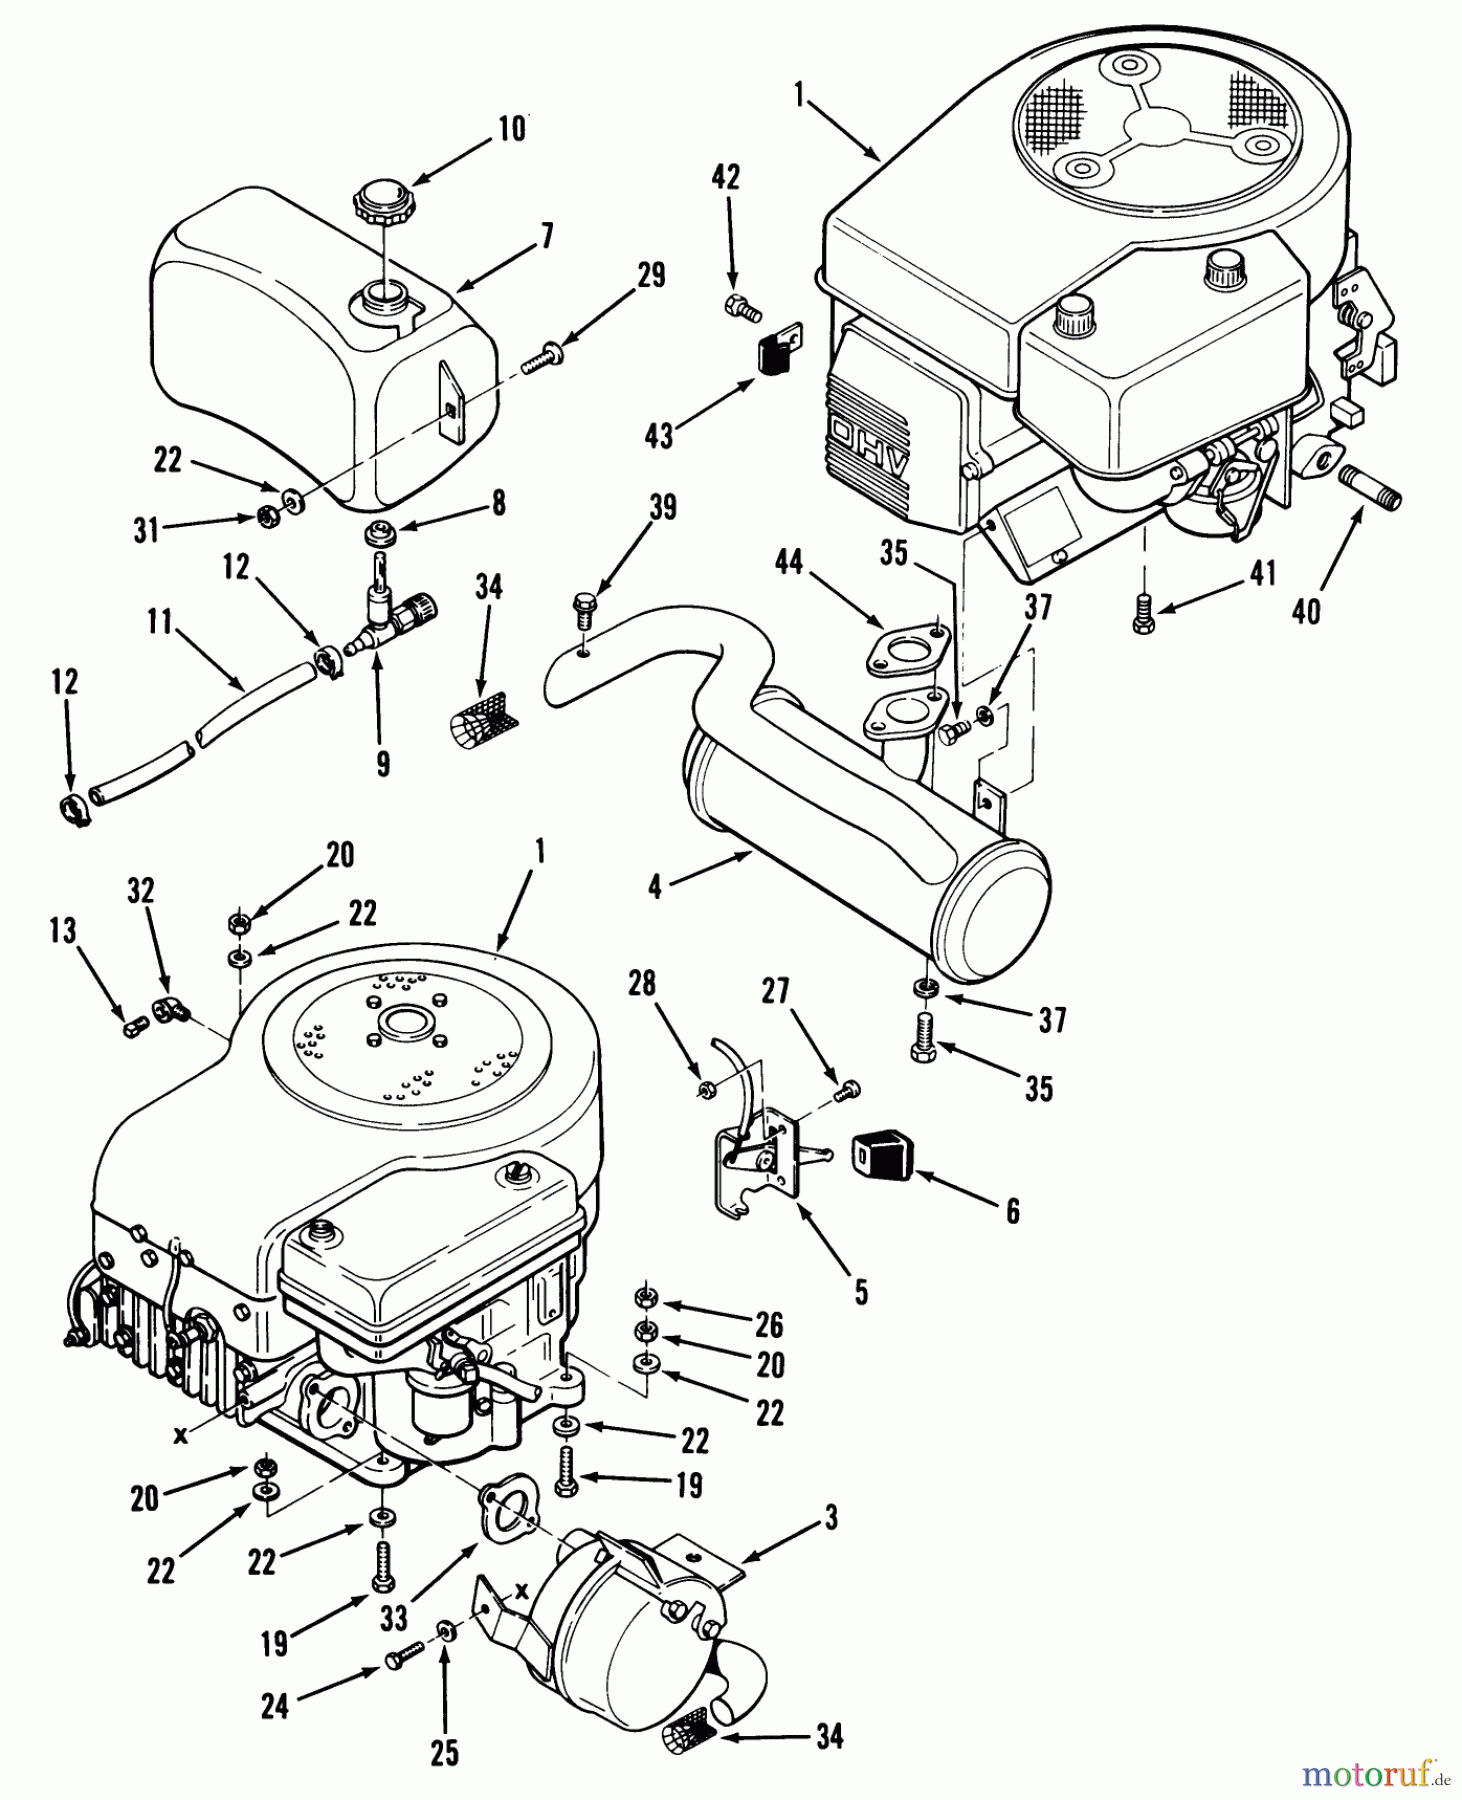  Toro Neu Mowers, Lawn & Garden Tractor Seite 1 32-12OE01 (212-H) - Toro 212-H Tractor, 1990 ENGINE, FUEL & EXHAUST SYSTEMS